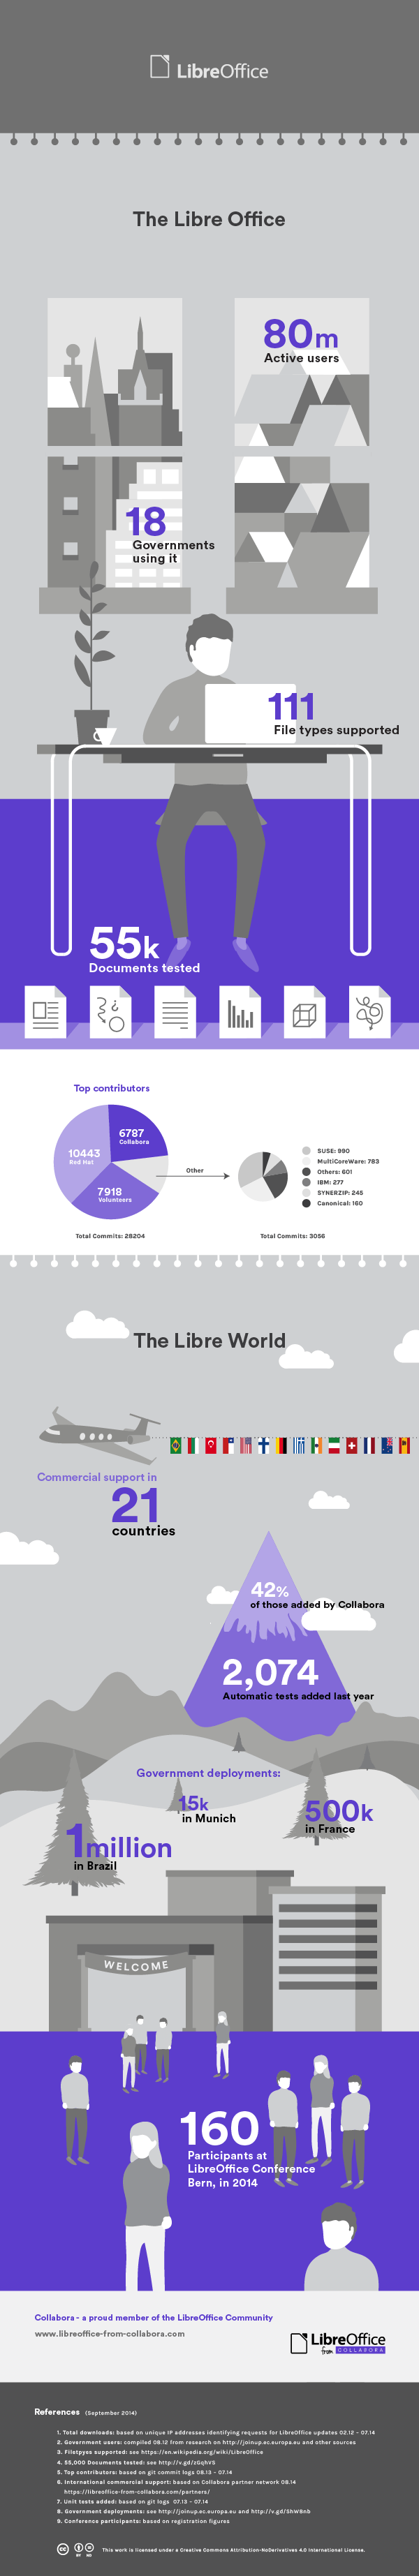 libreoffice-infographic-web-1.2